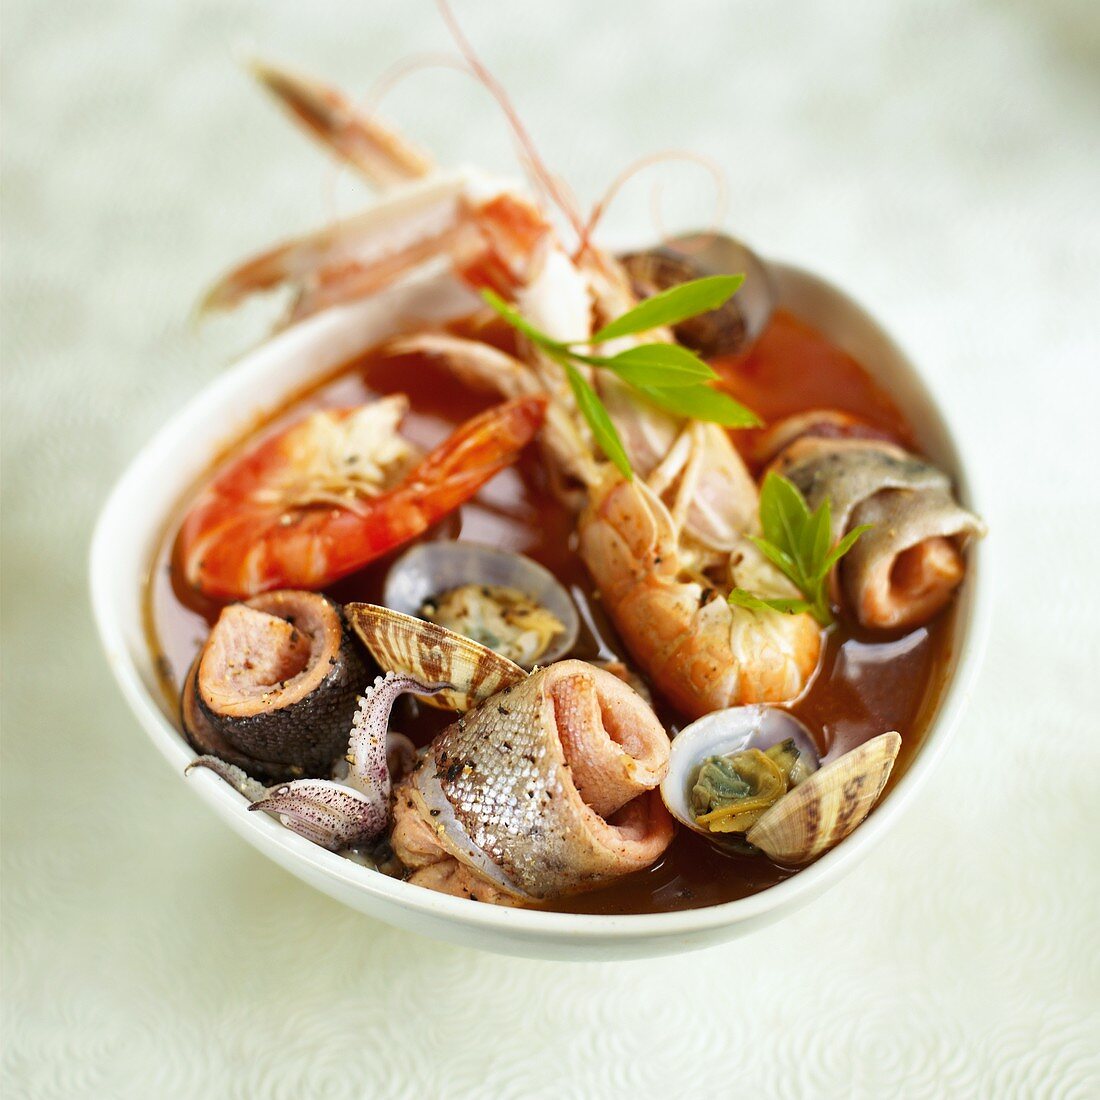 Seafood soup